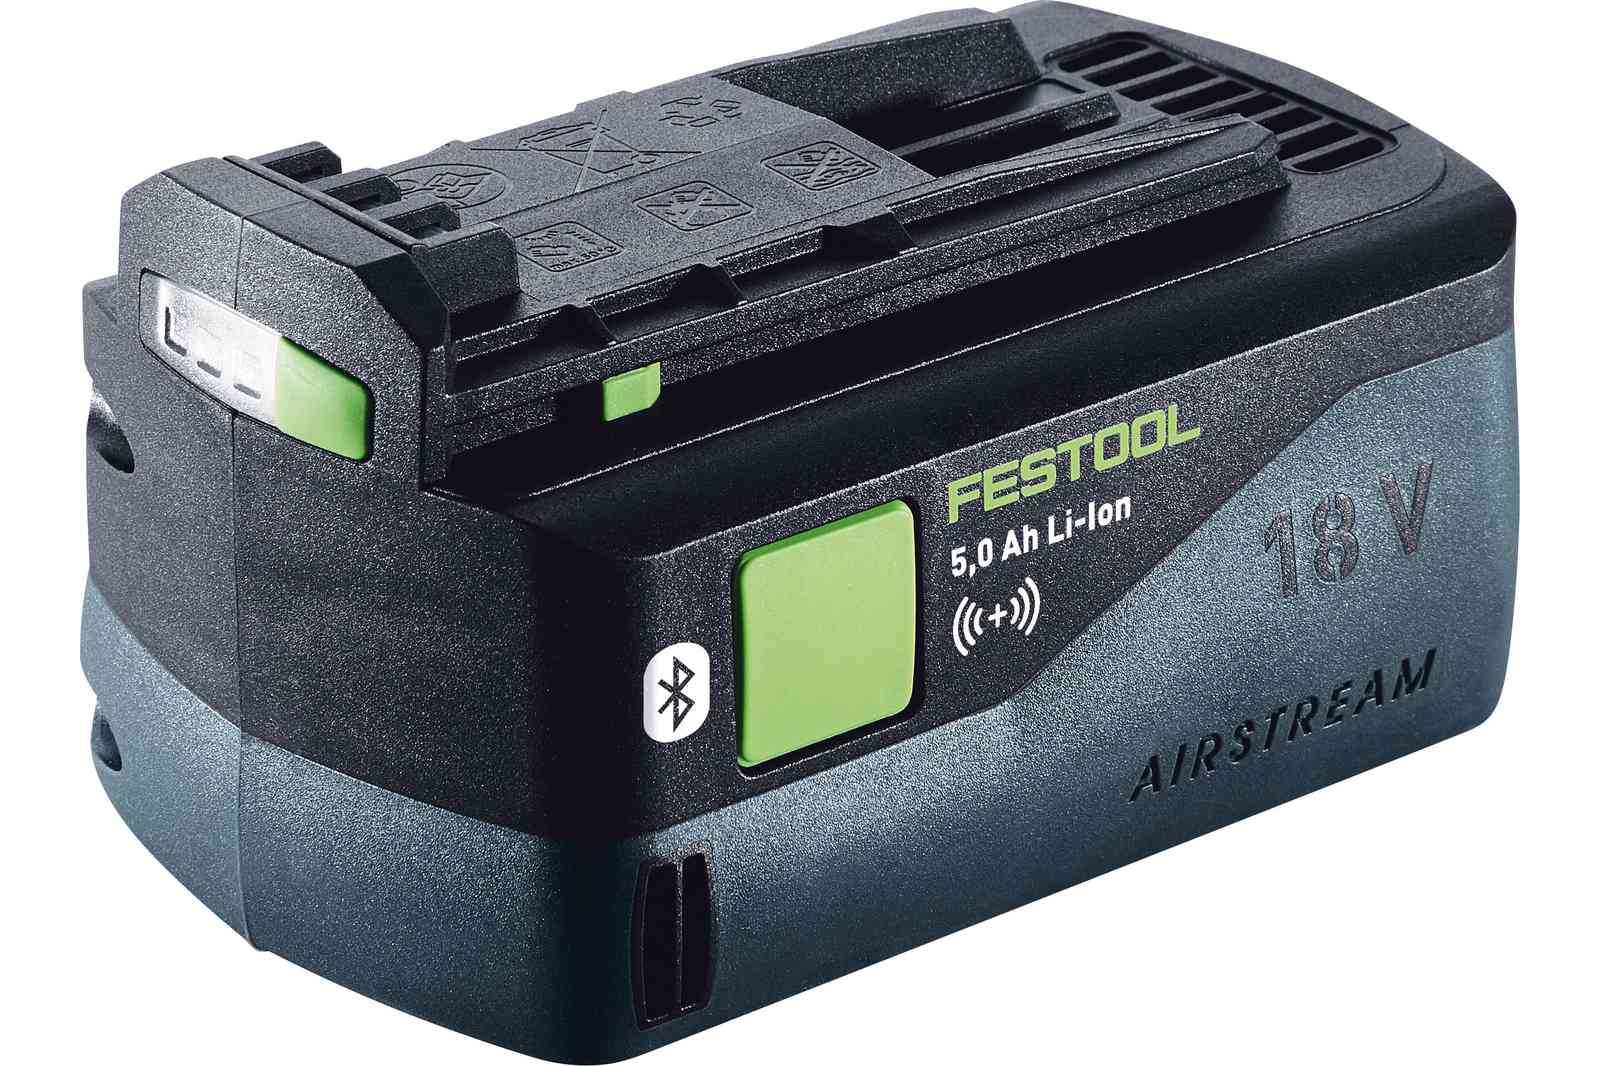 18V Li-ion 5.0Ah Bluetooth Airstream Battery Pack BP 18 577660 by Festool